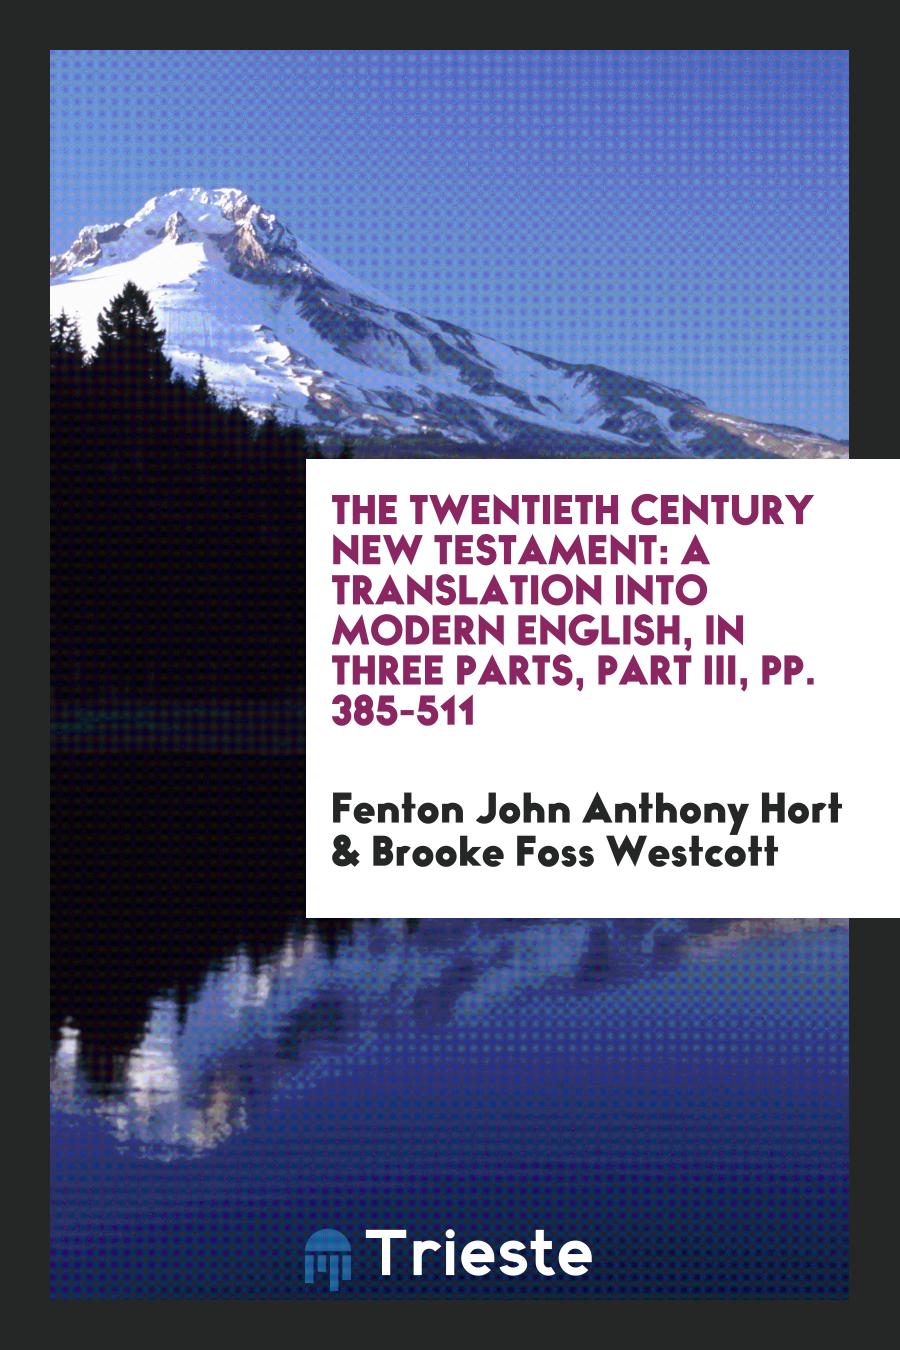 The Twentieth Century New Testament: A Translation Into Modern English, in Three Parts, Part III, pp. 385-511